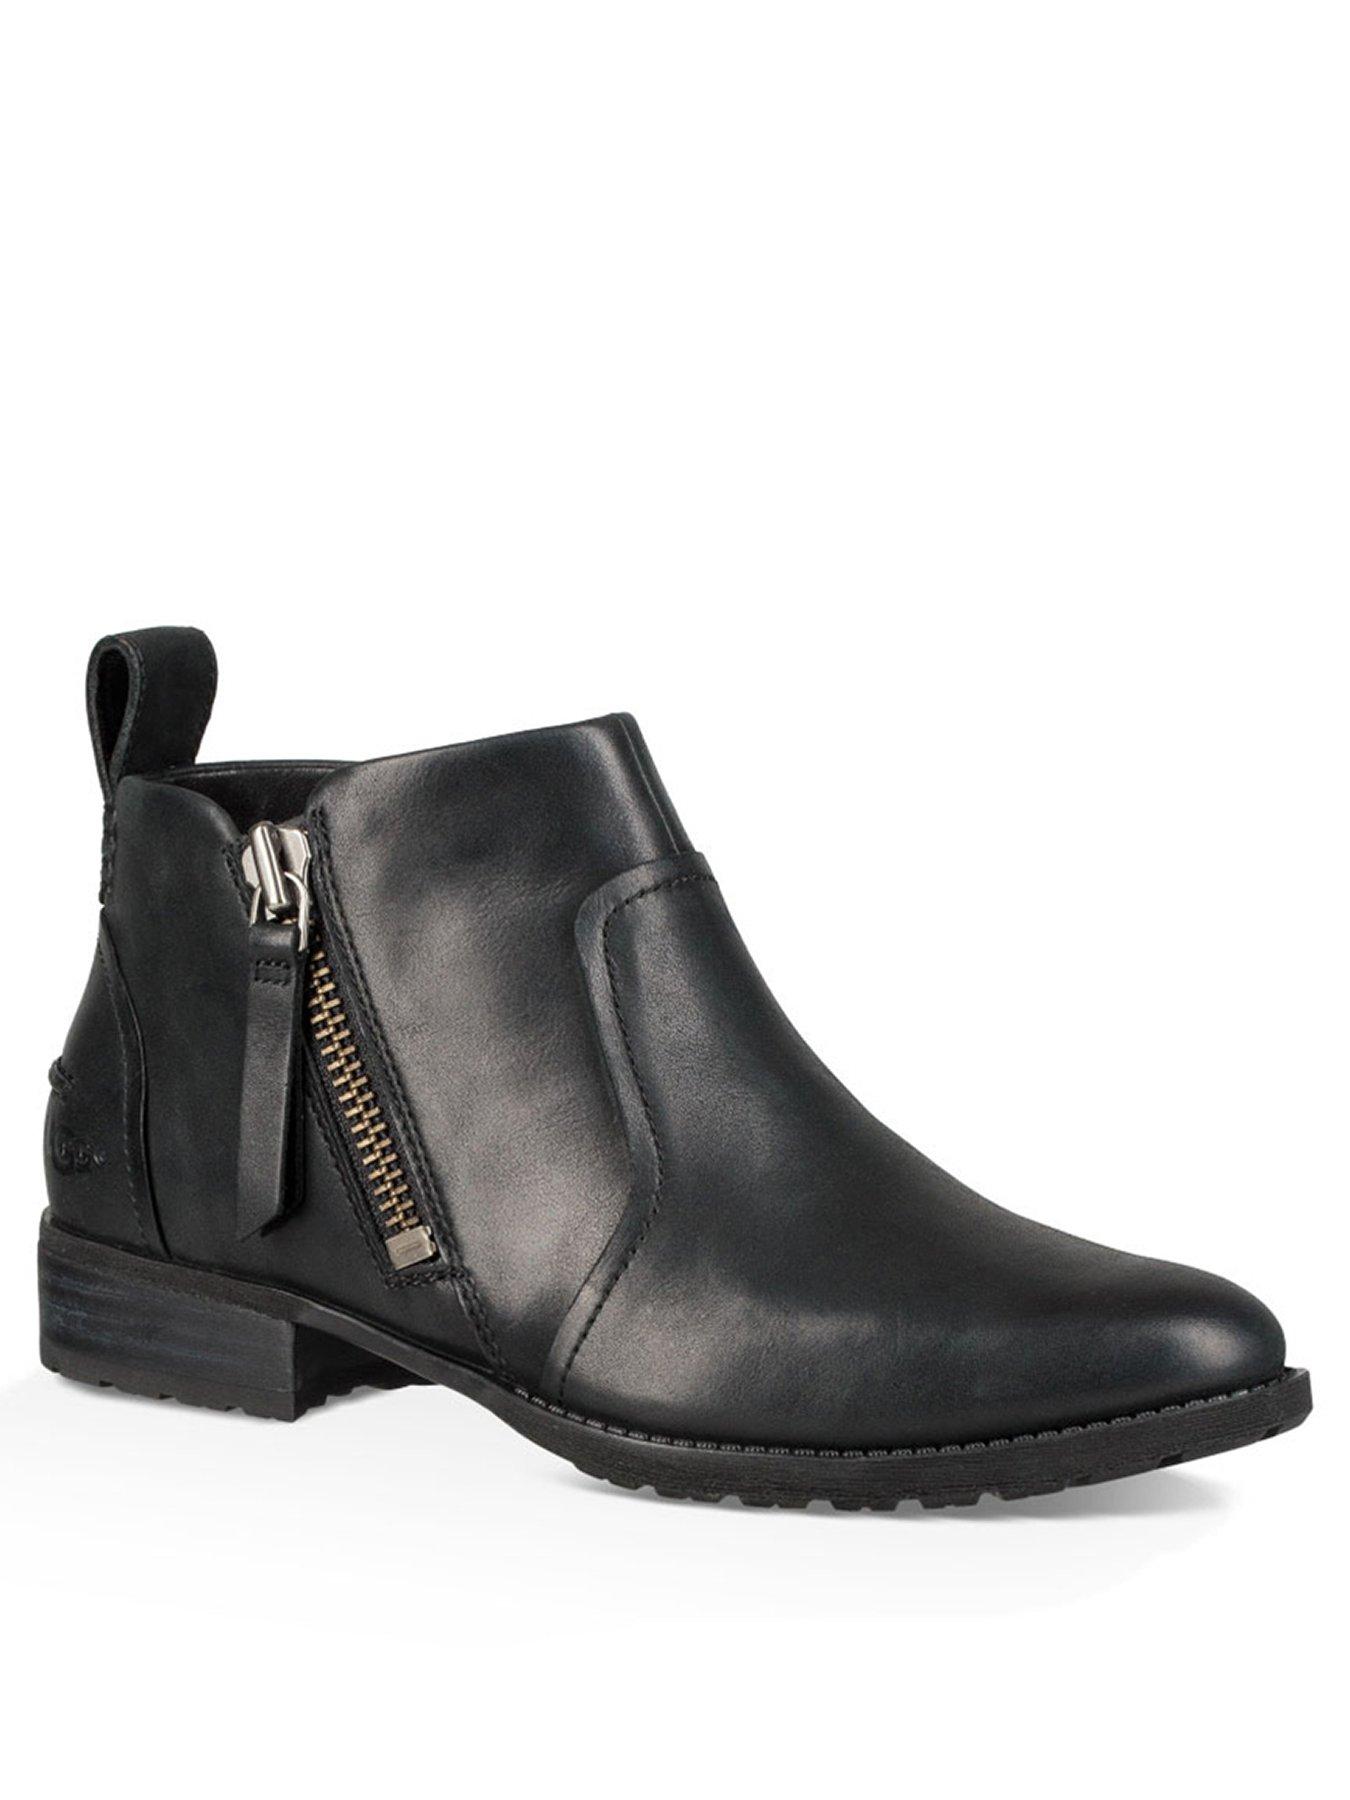 leather aureo boot